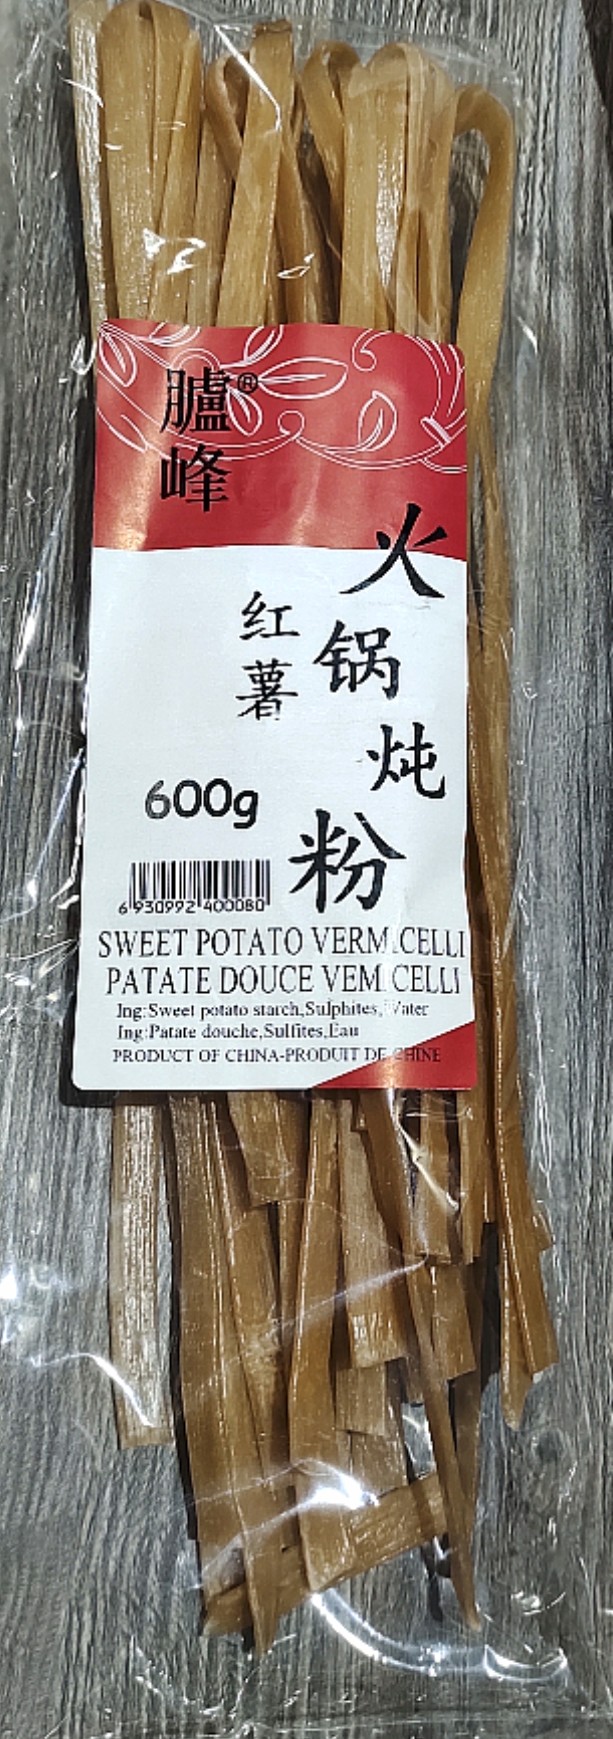 sweet-potato-vermicelli